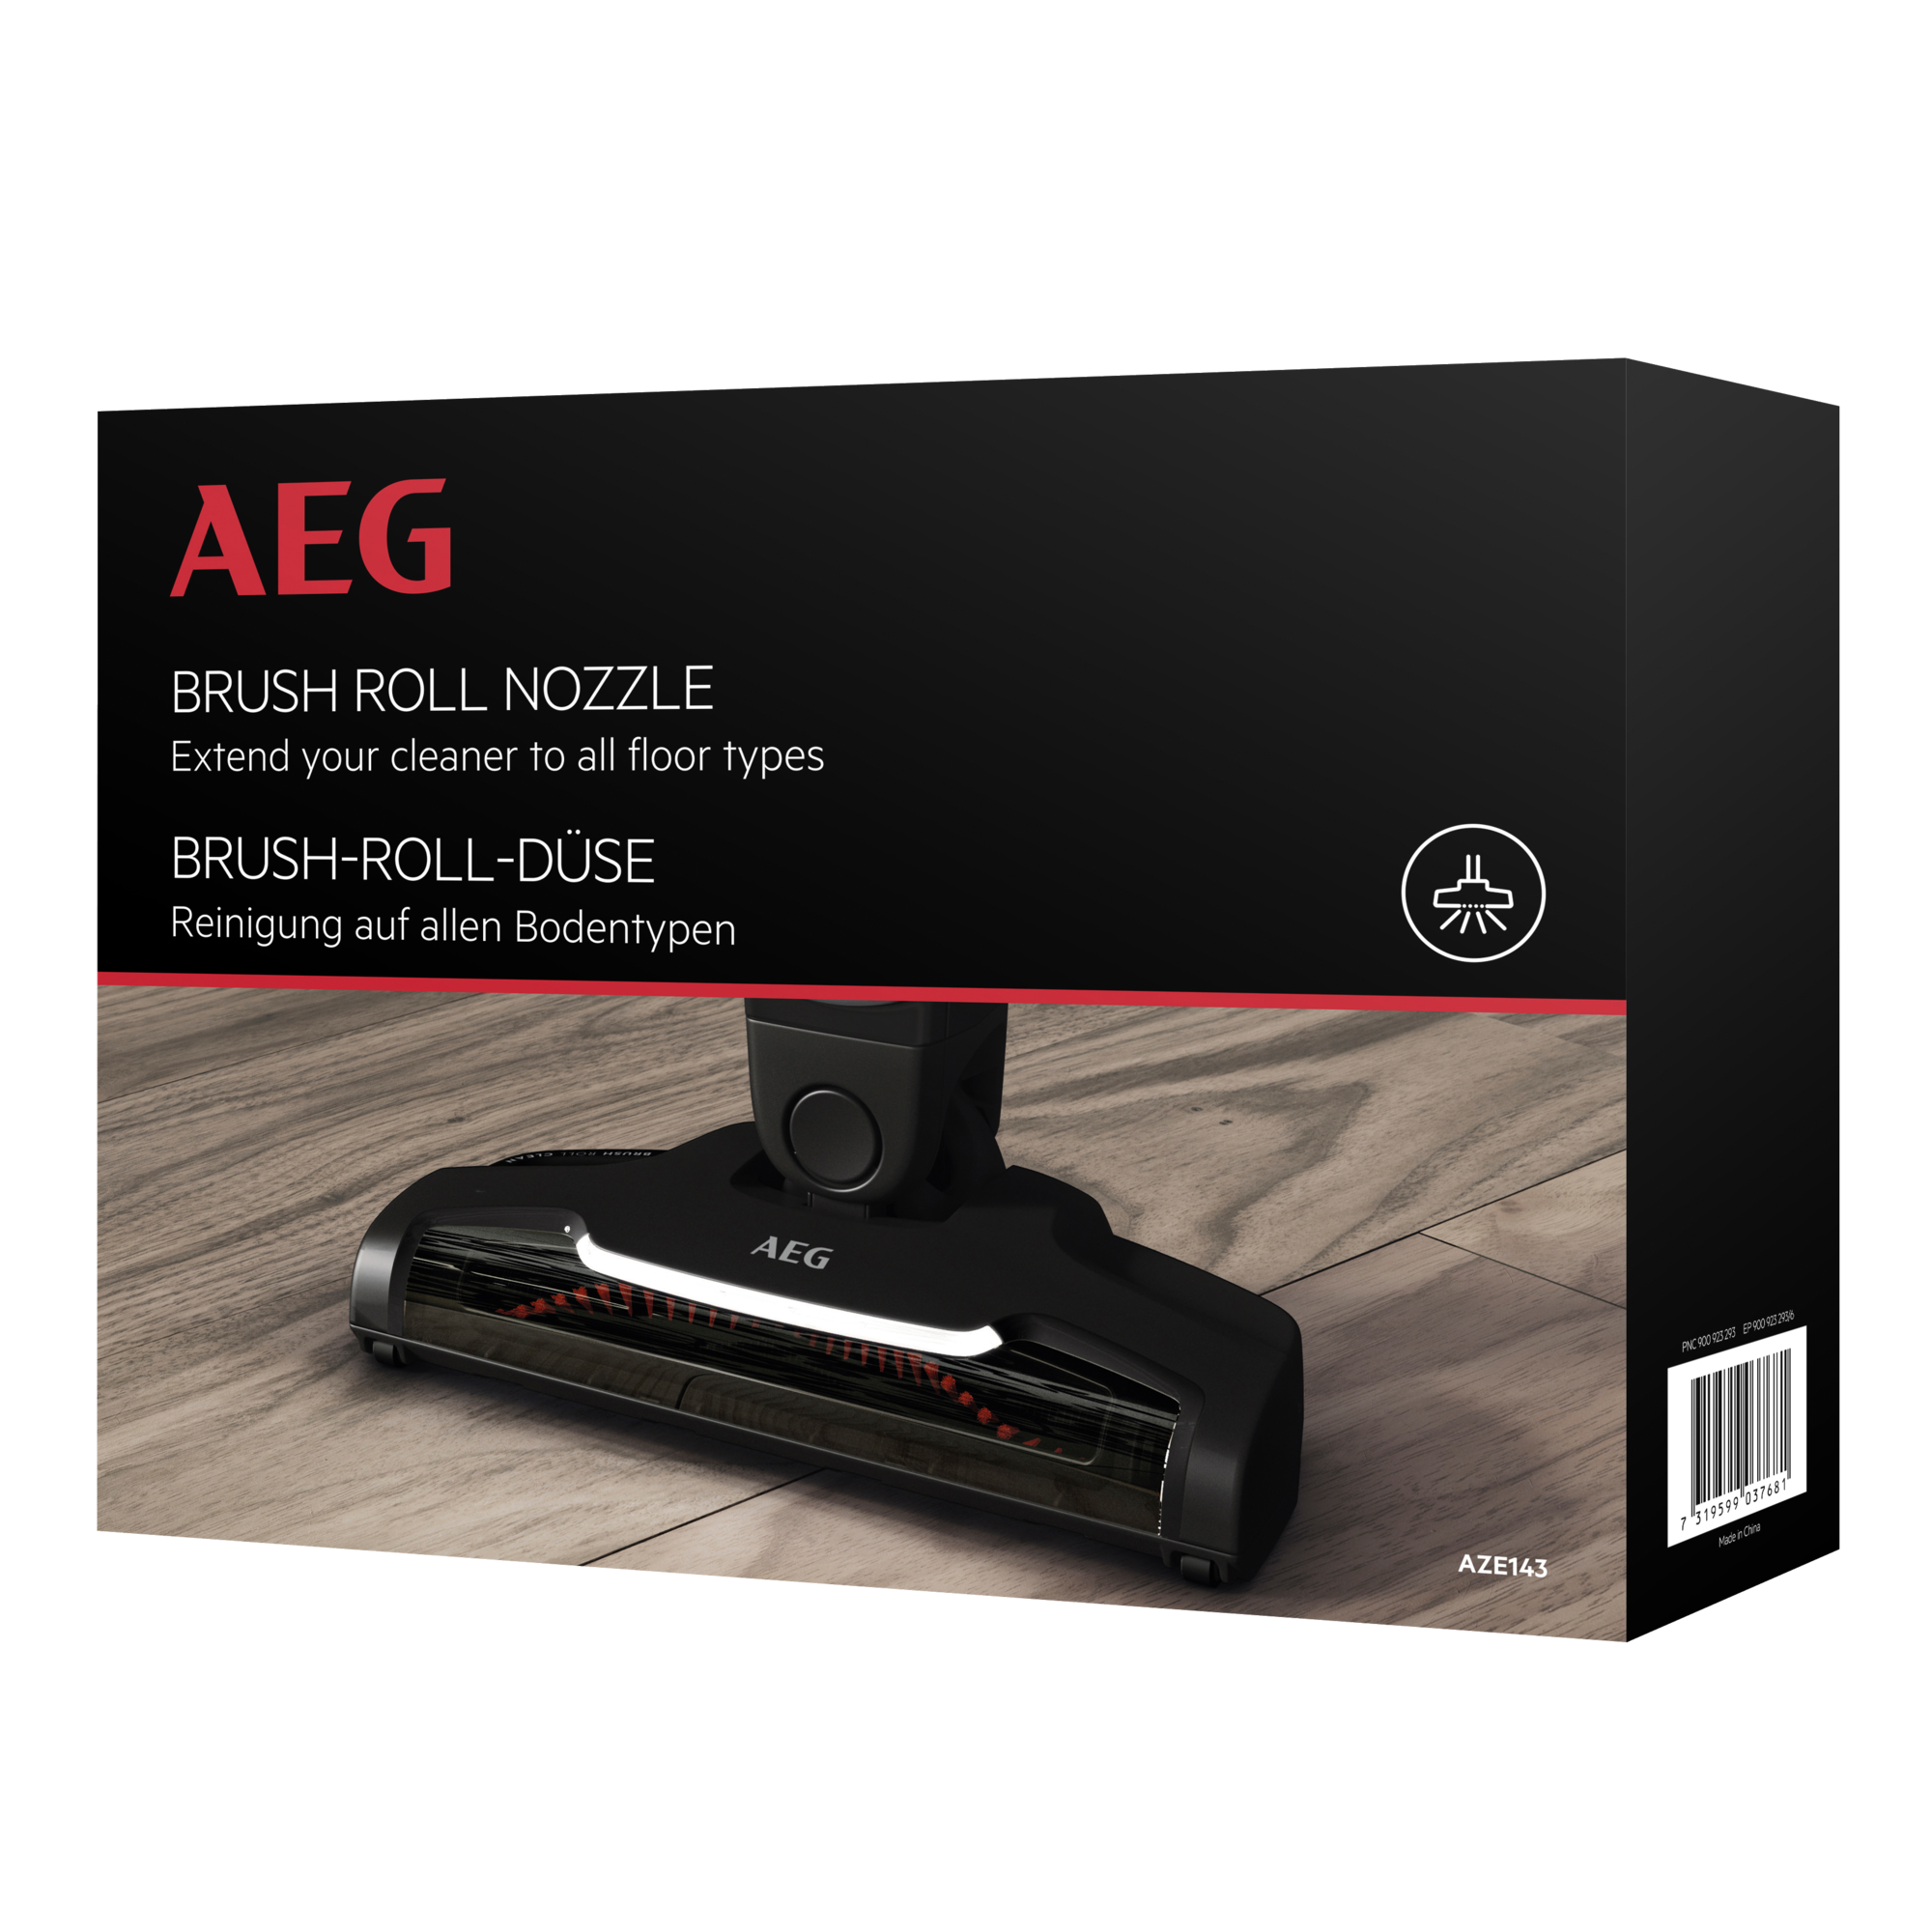 AEG AZE143, Brush-Roll-Düse